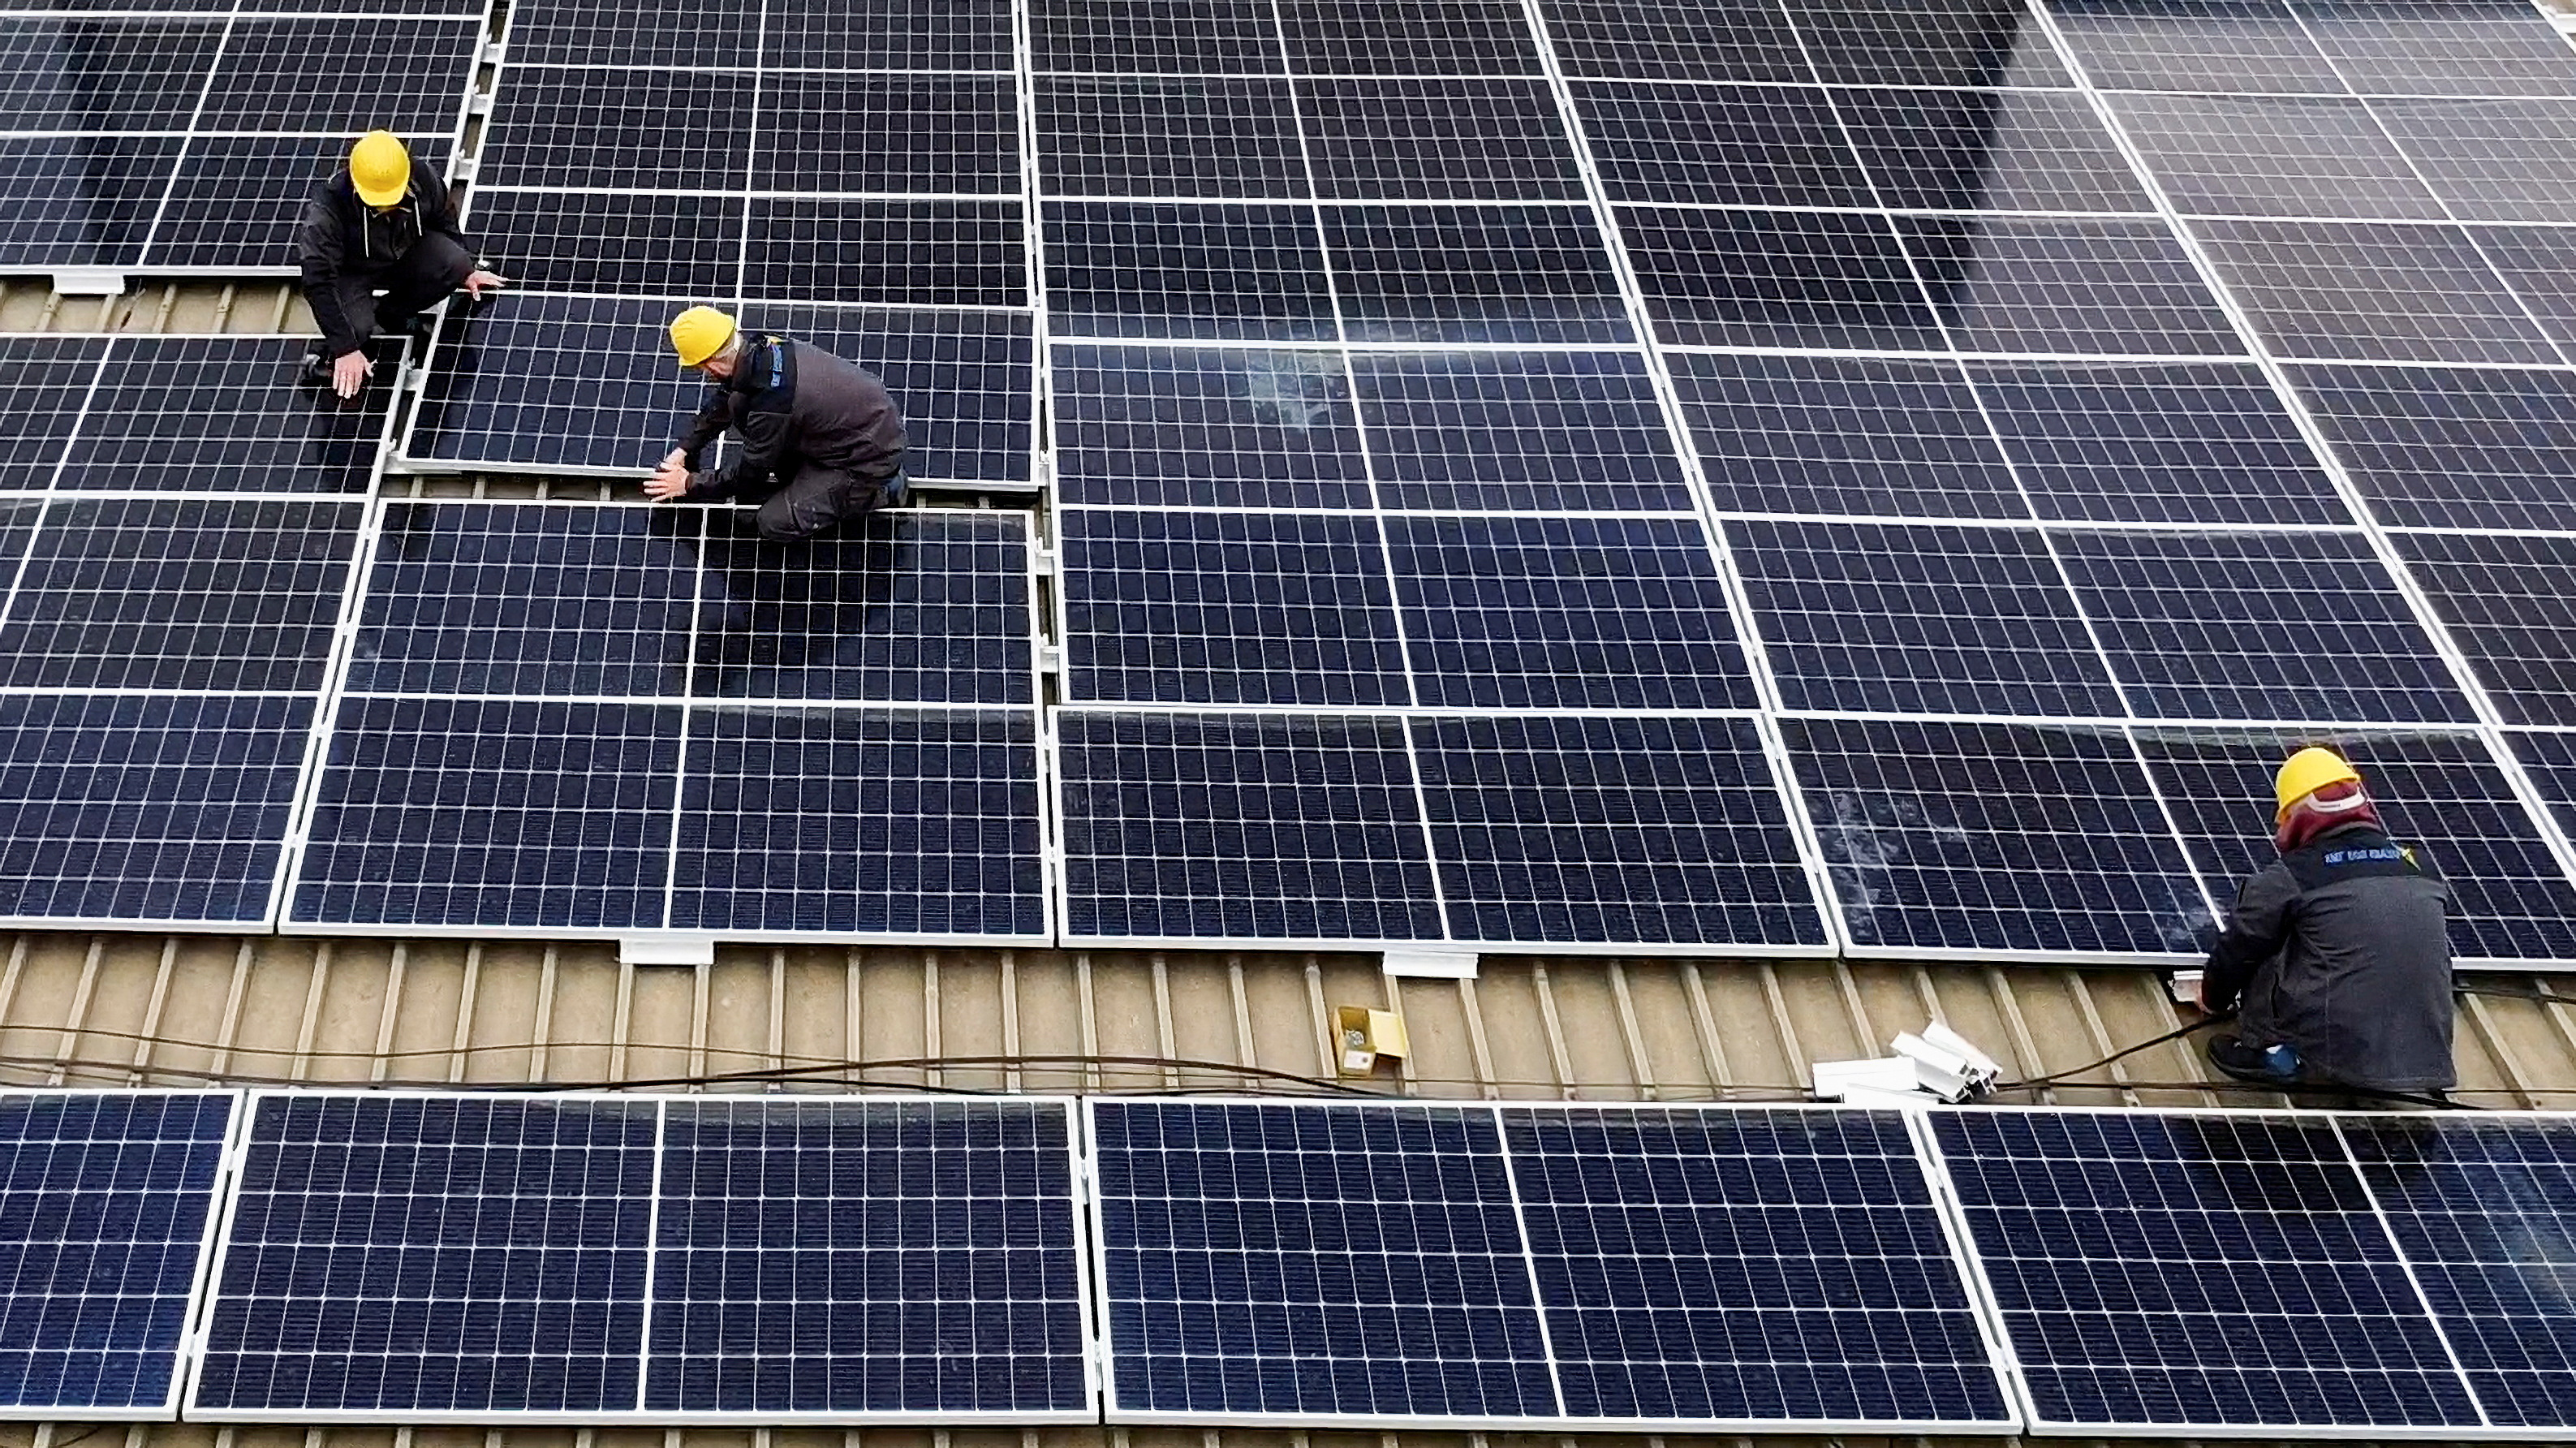 Workers install solar panels on an office building in Skopje